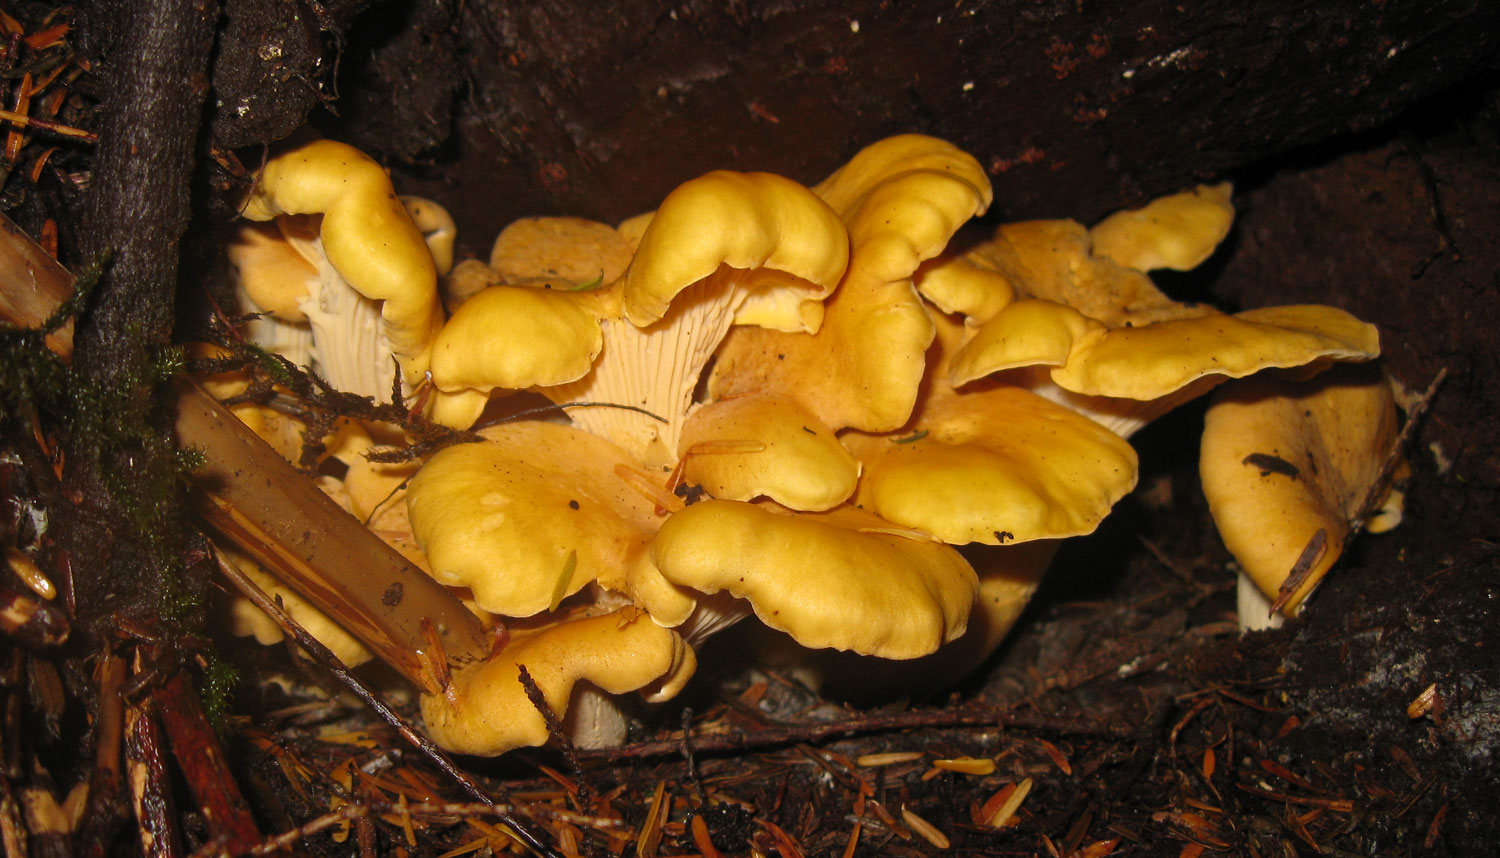 Golden chanterelles ( Cantharellus cibarius ) found hiding under a big root. This is a delicious edible!